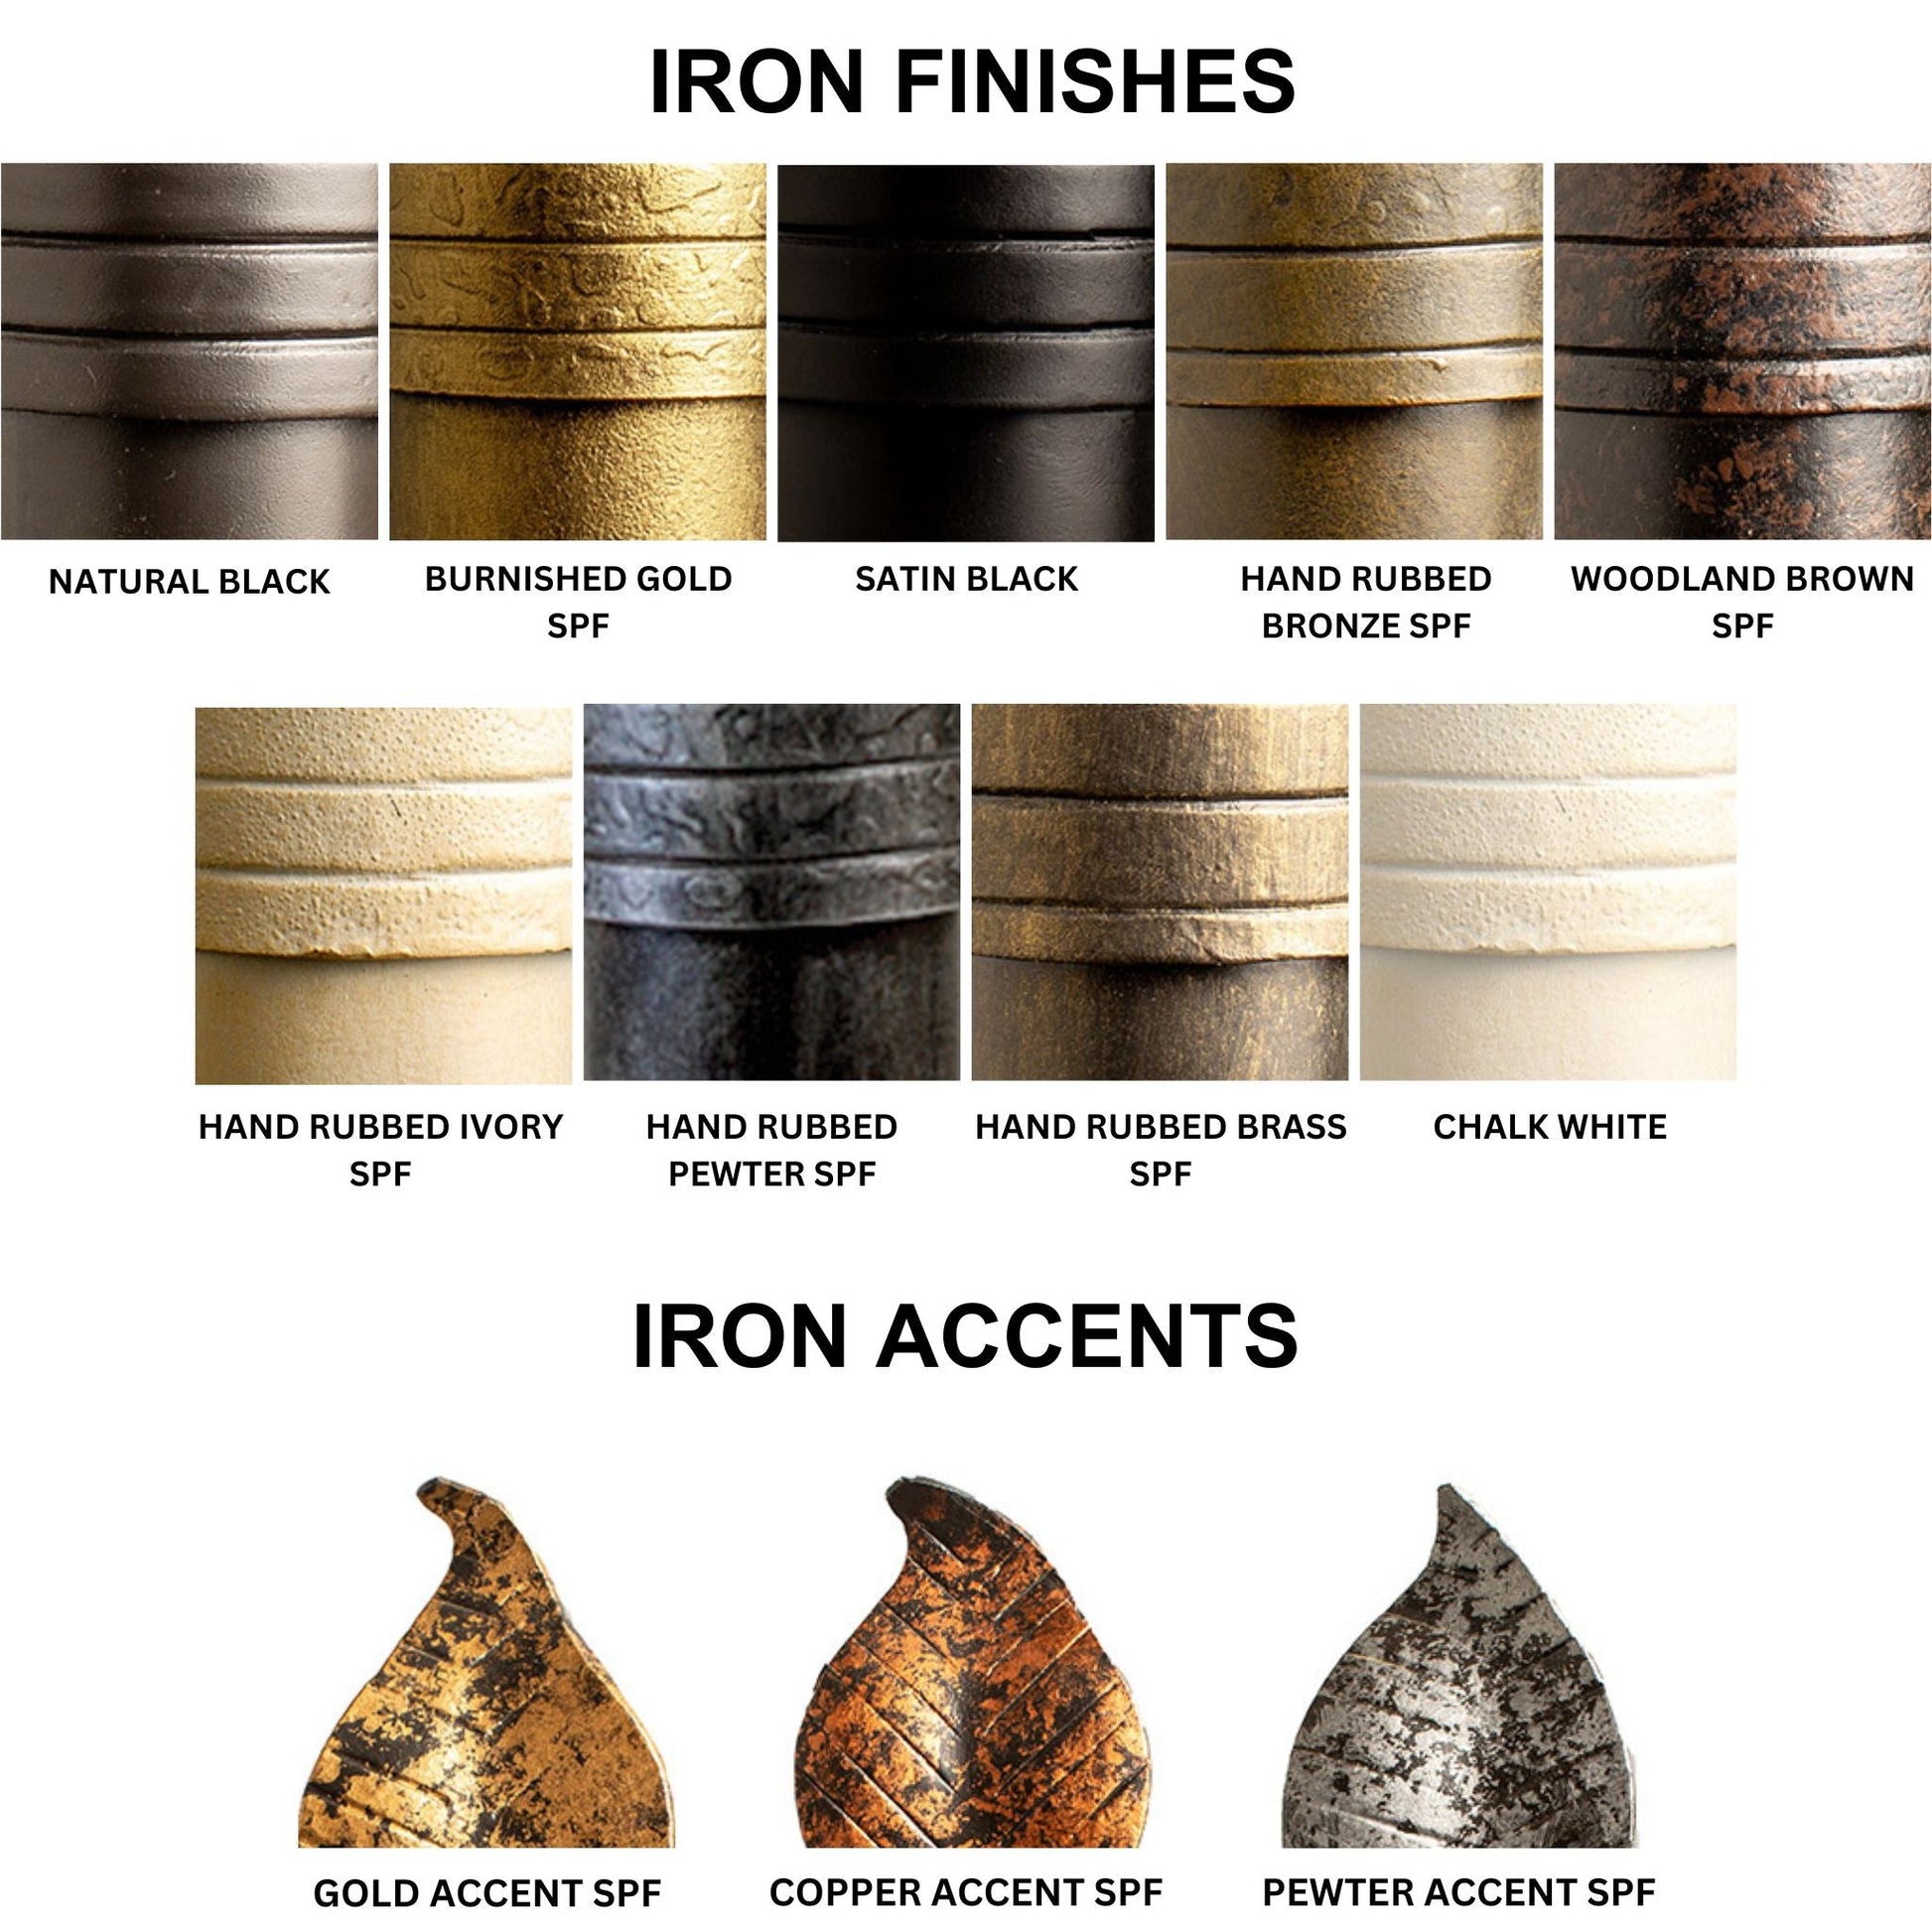 Stone County Ironworks Knot 24" Burnished Gold Iron Towel Bar